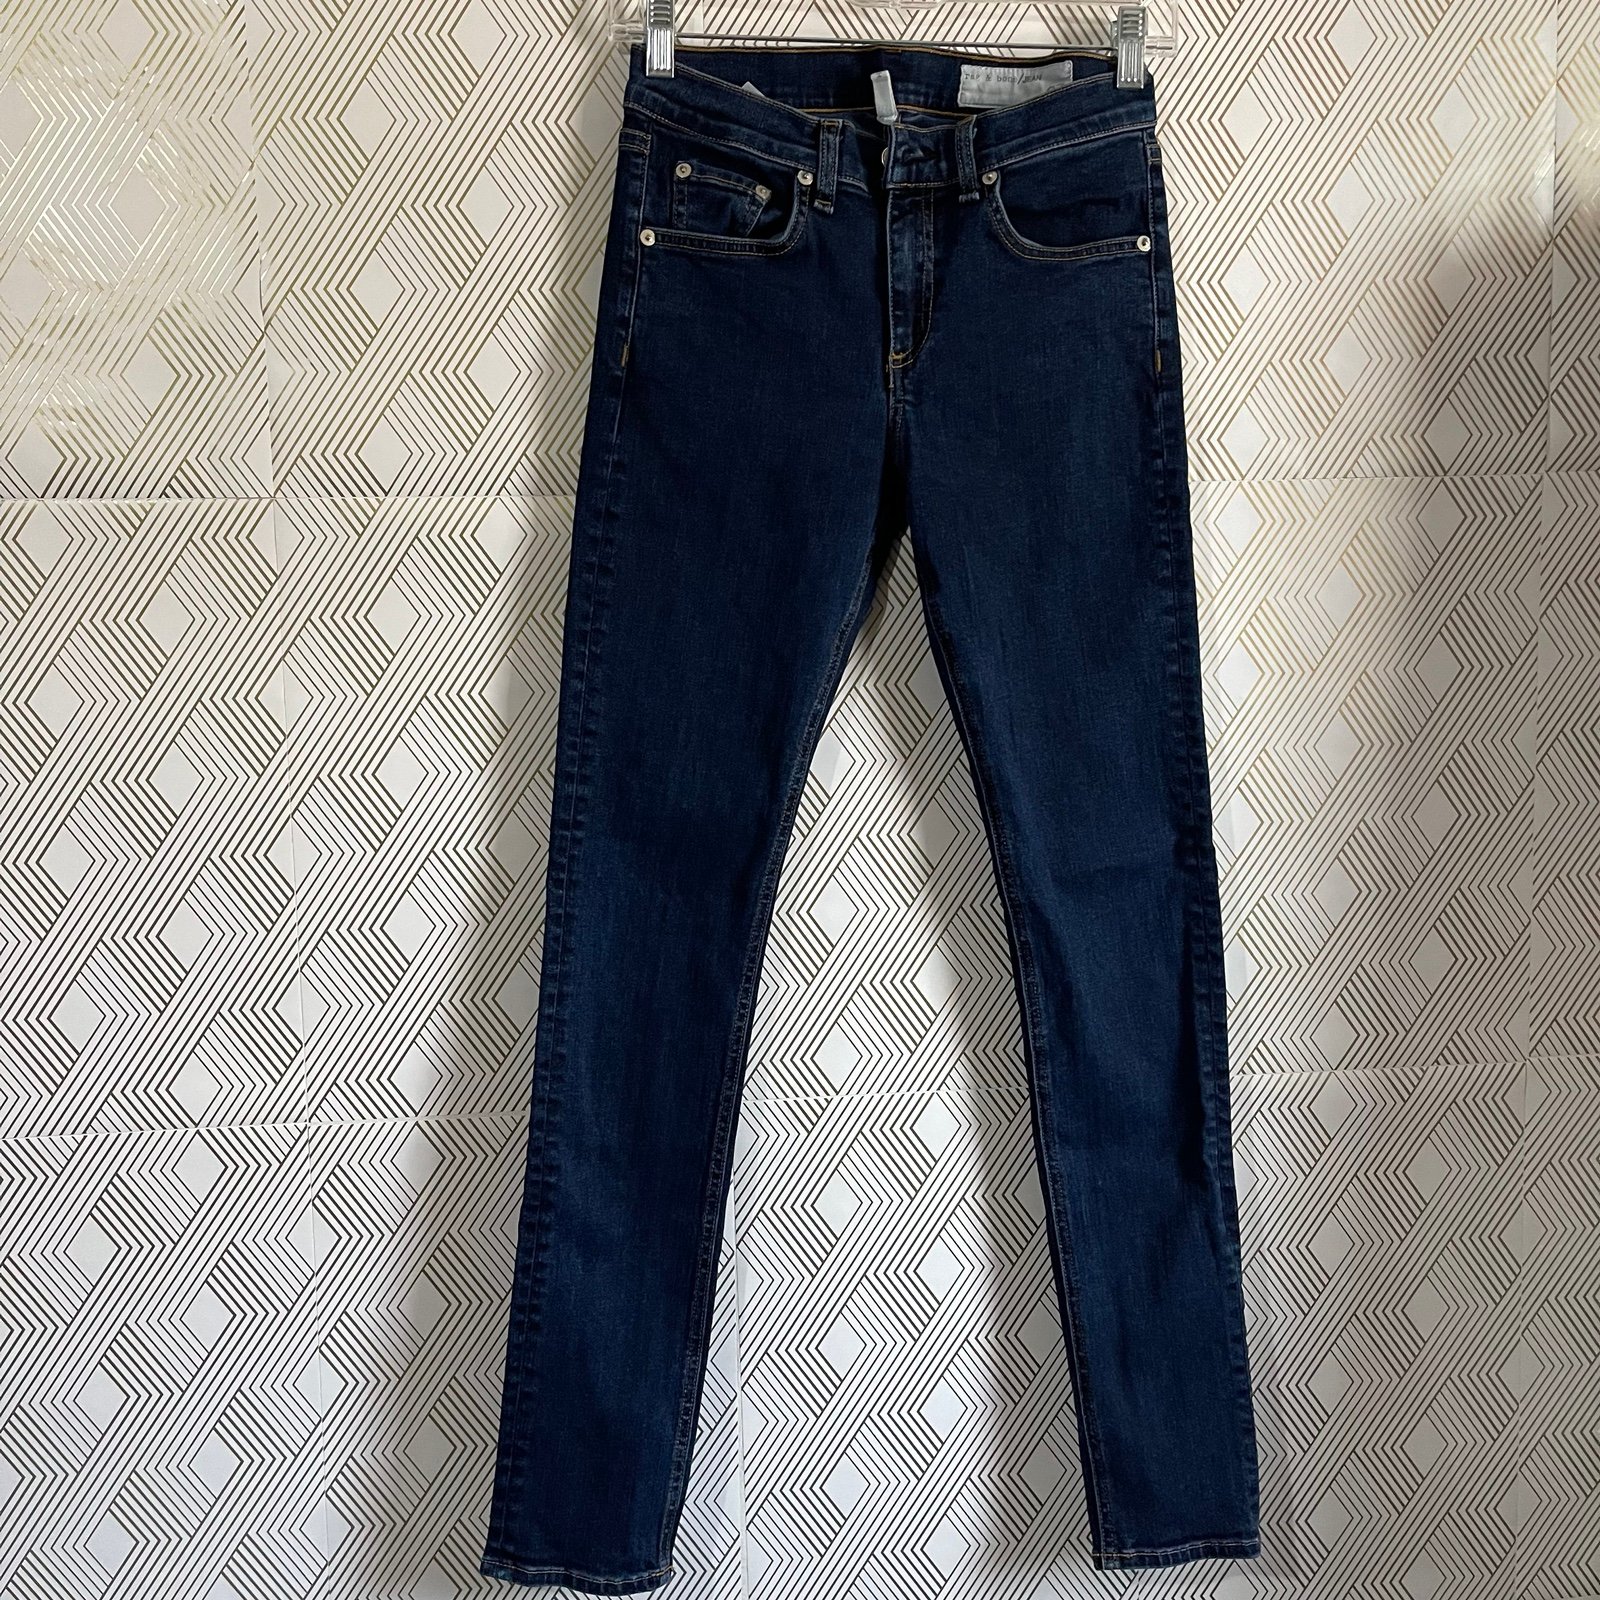 floor price Rag & Bone Skinny jeans SZ 27 FeYvFR7qd onl